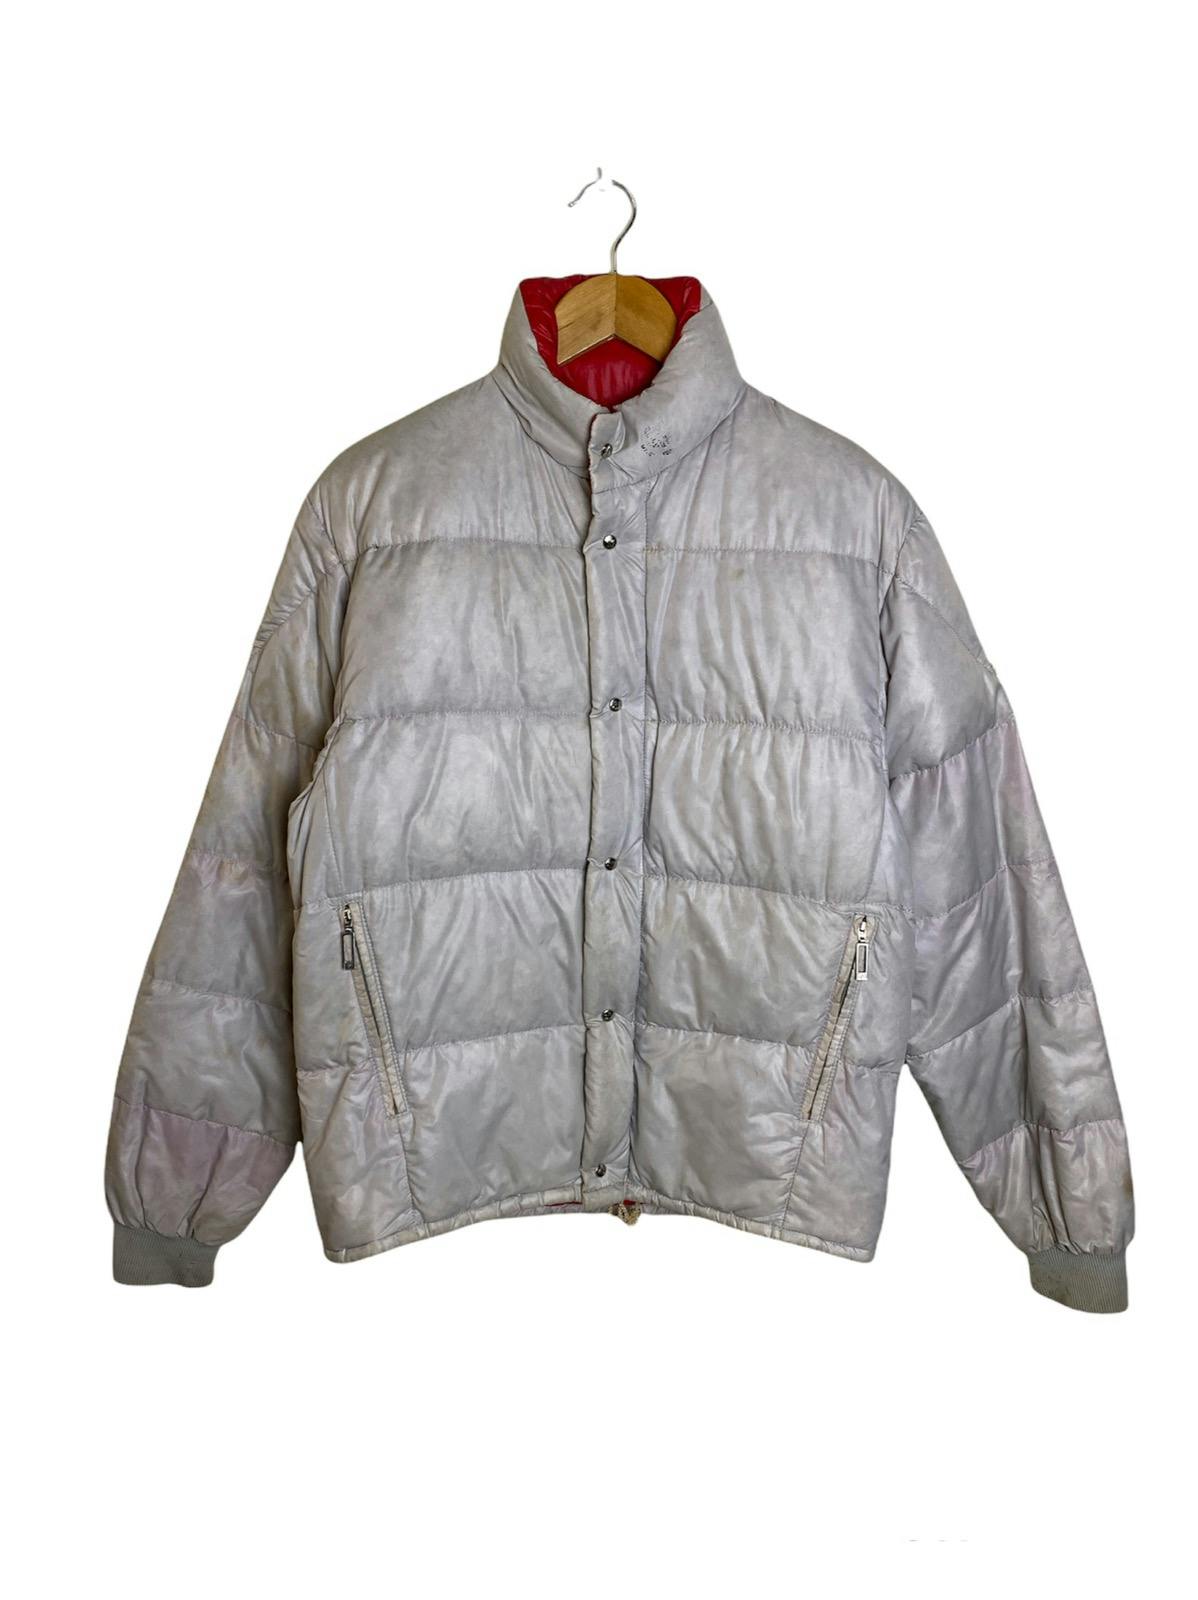 Vintage MONCLER Puffer Goose Down Winter Jacket - 1